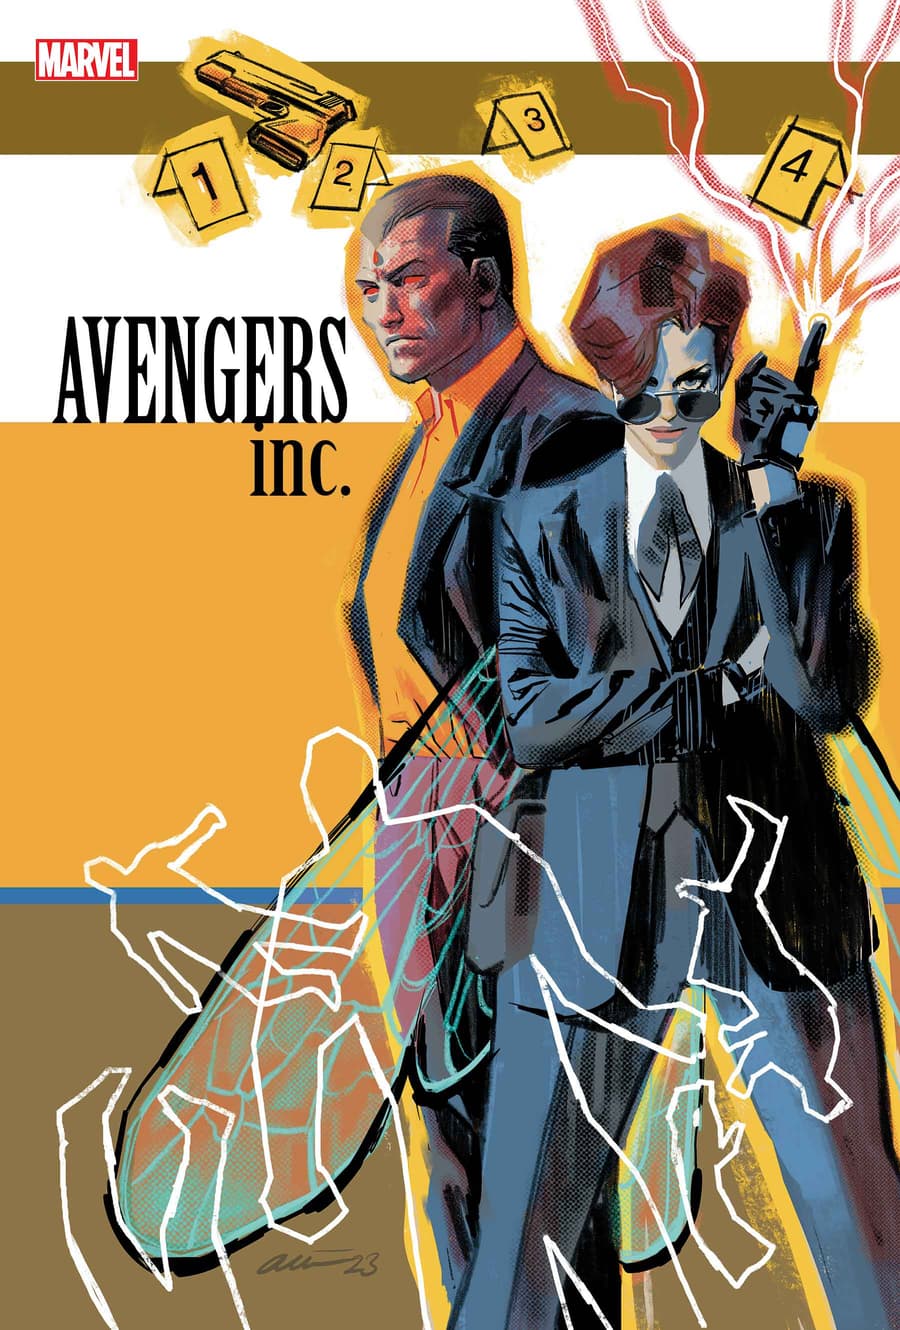 AVENGERS INC. #1 cover by Daniel Acuña